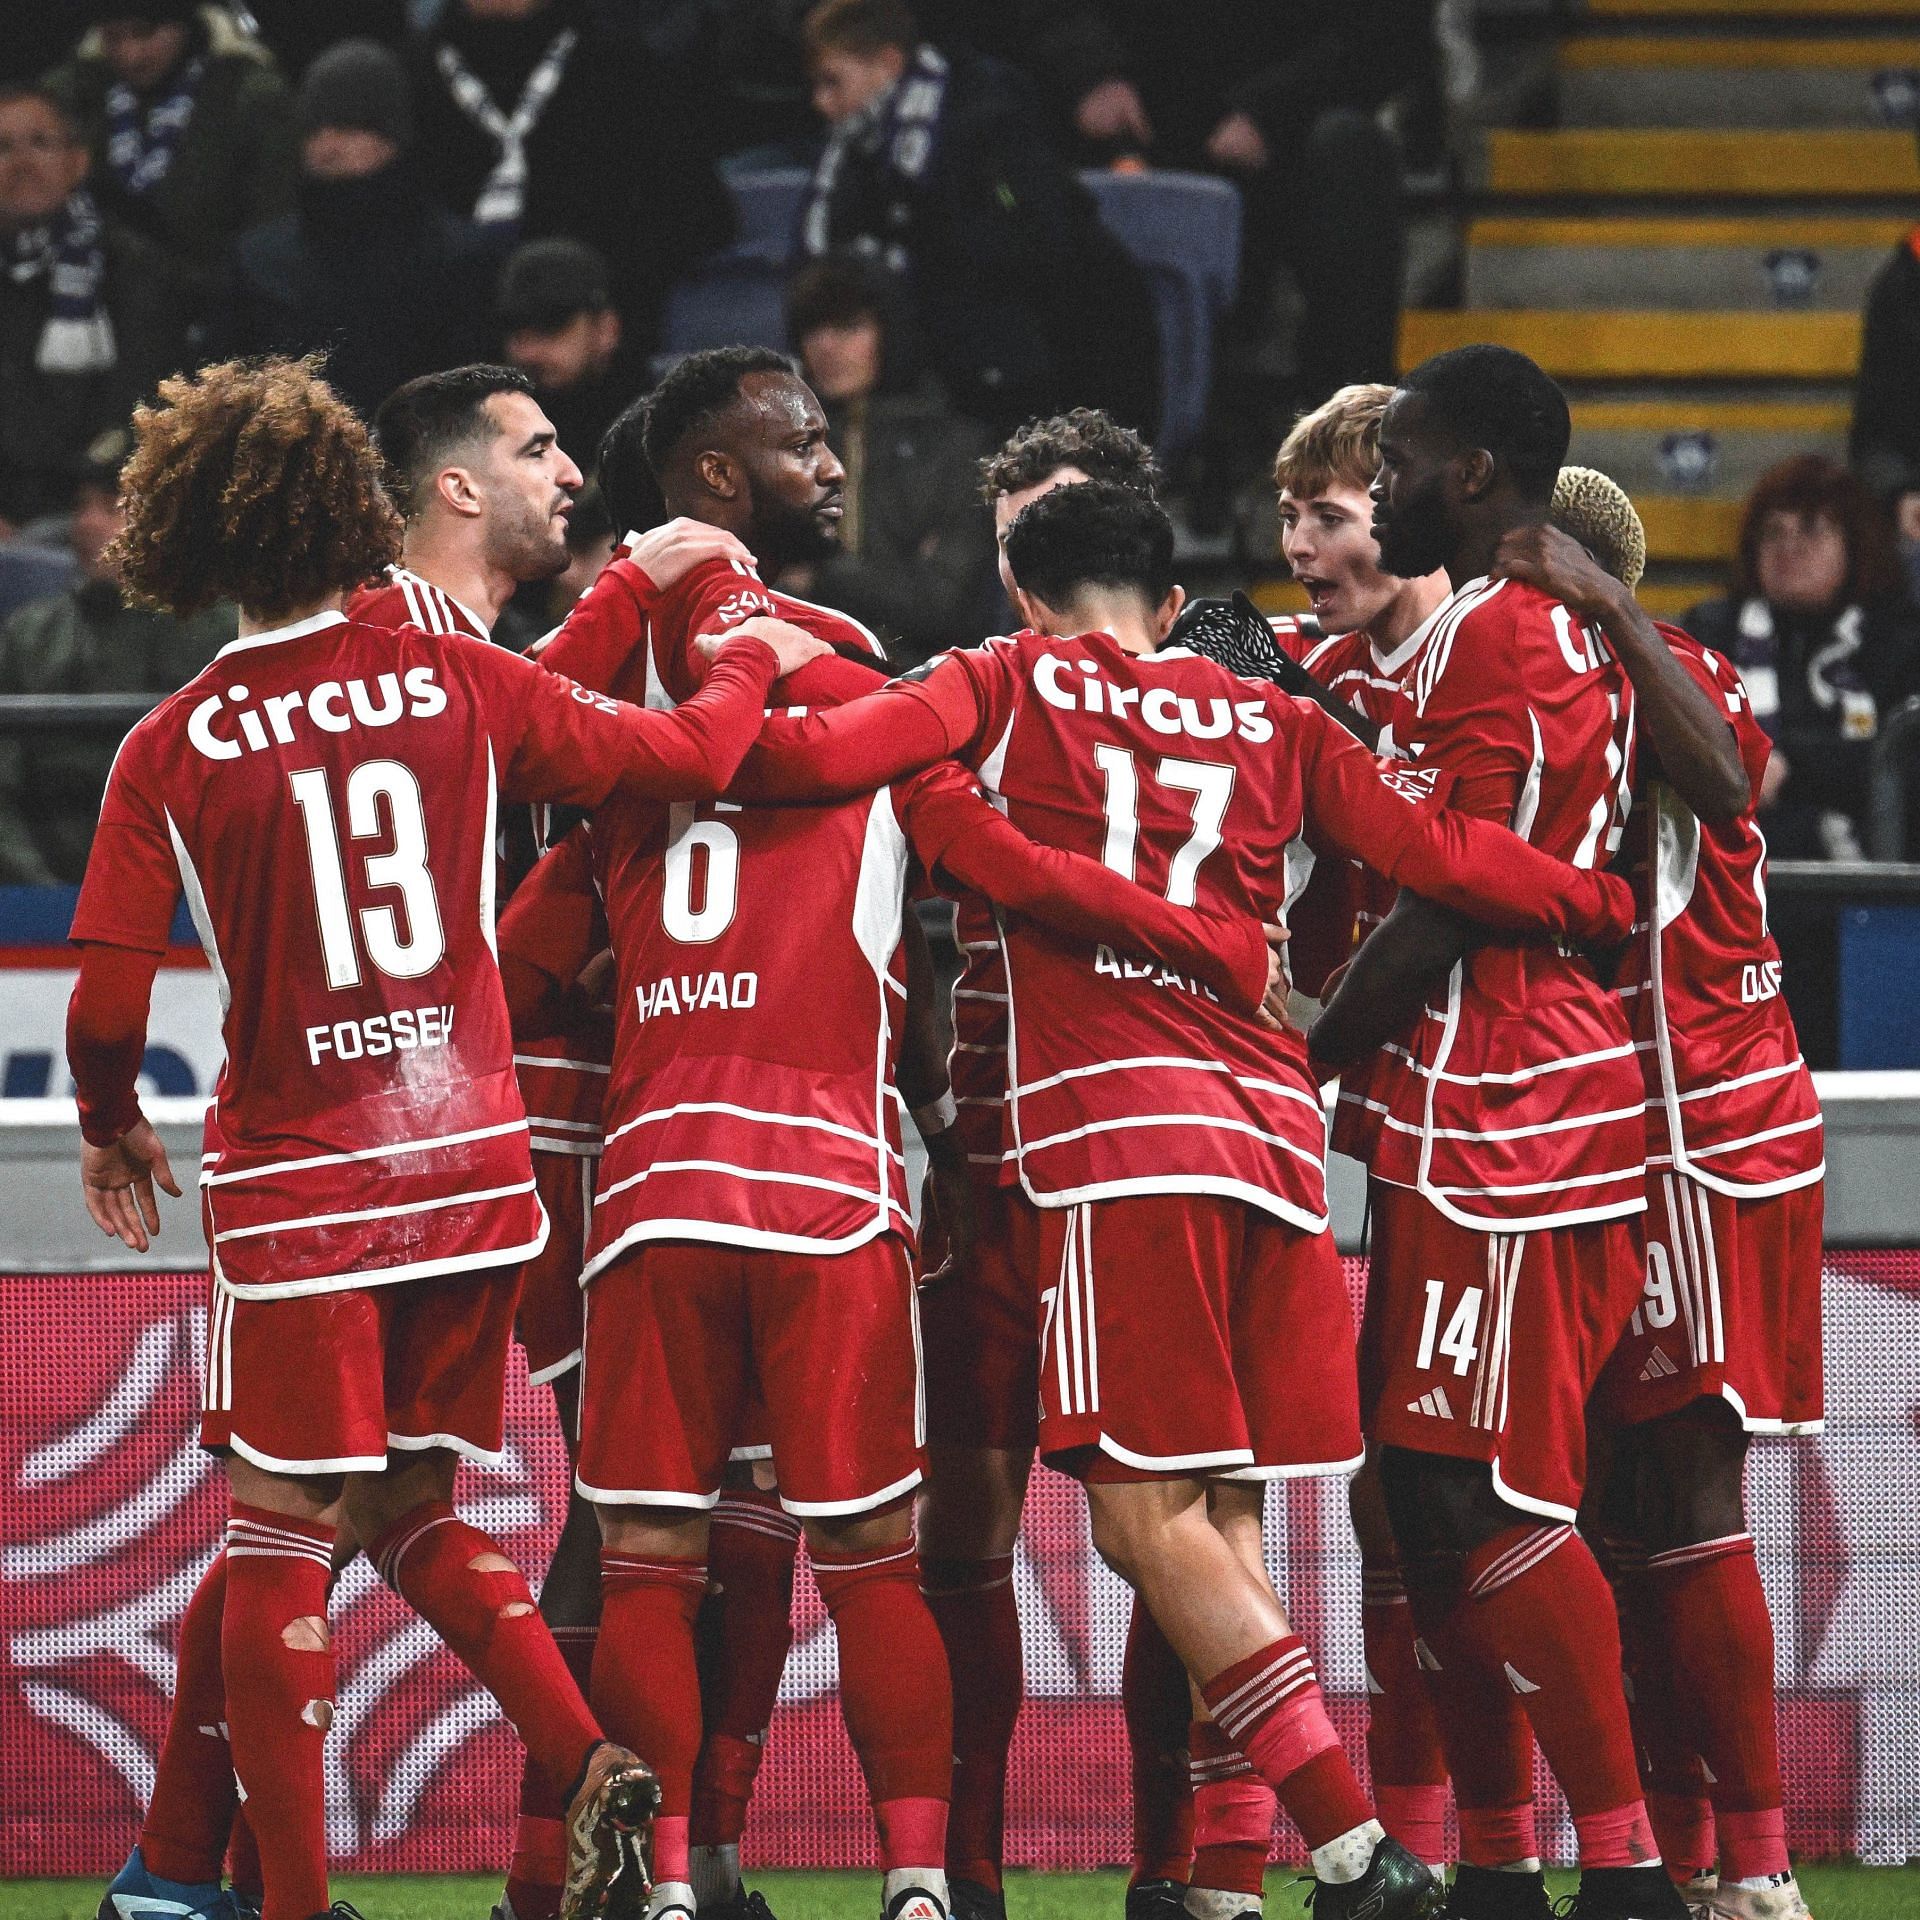 Standard Liege will face Charleroi on Saturday 